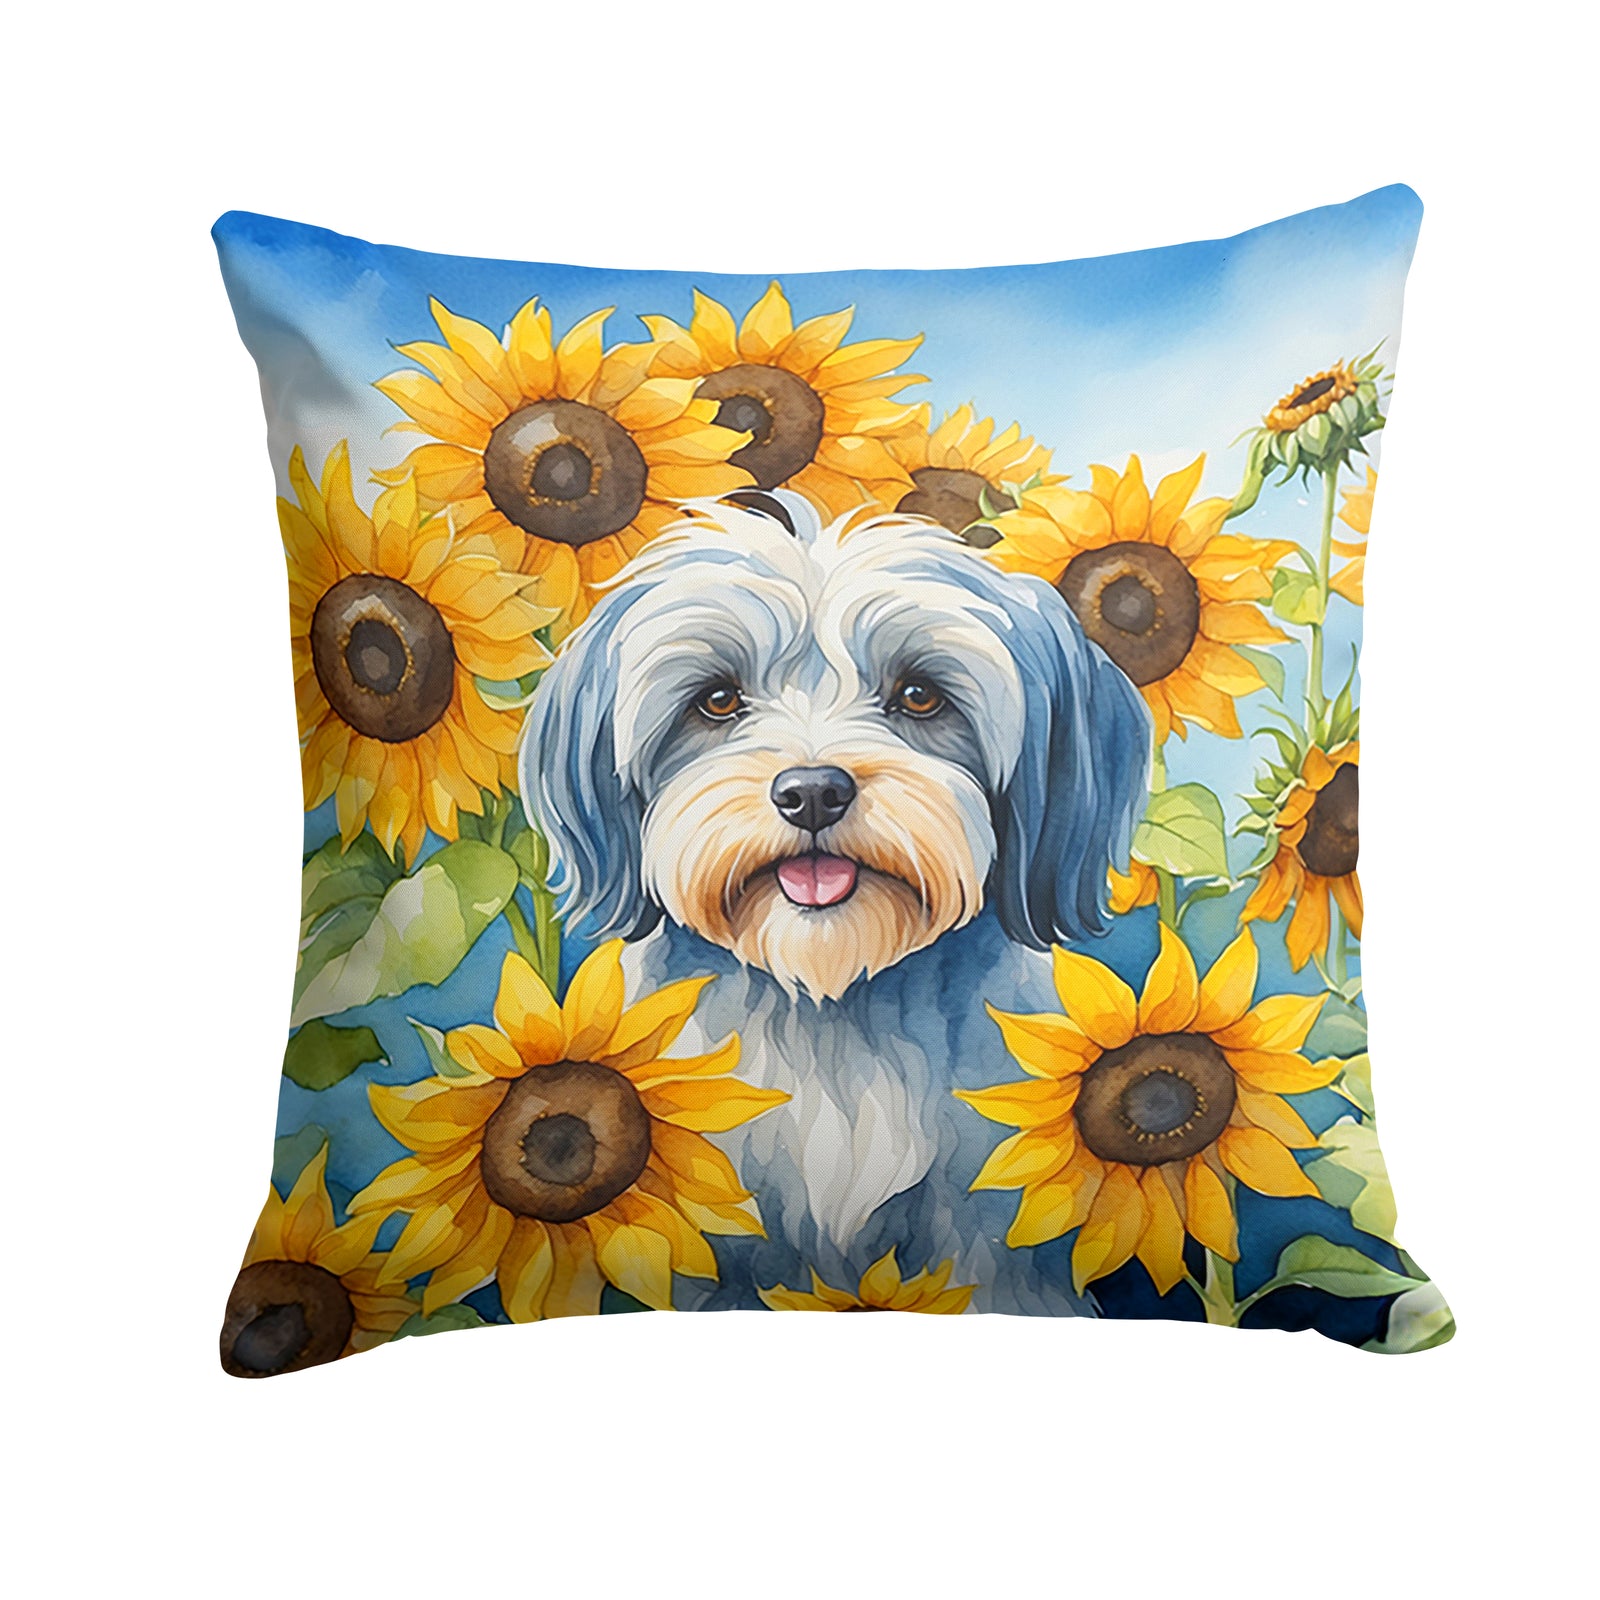 Buy this Tibetan Terrier in Sunflowers Throw Pillow